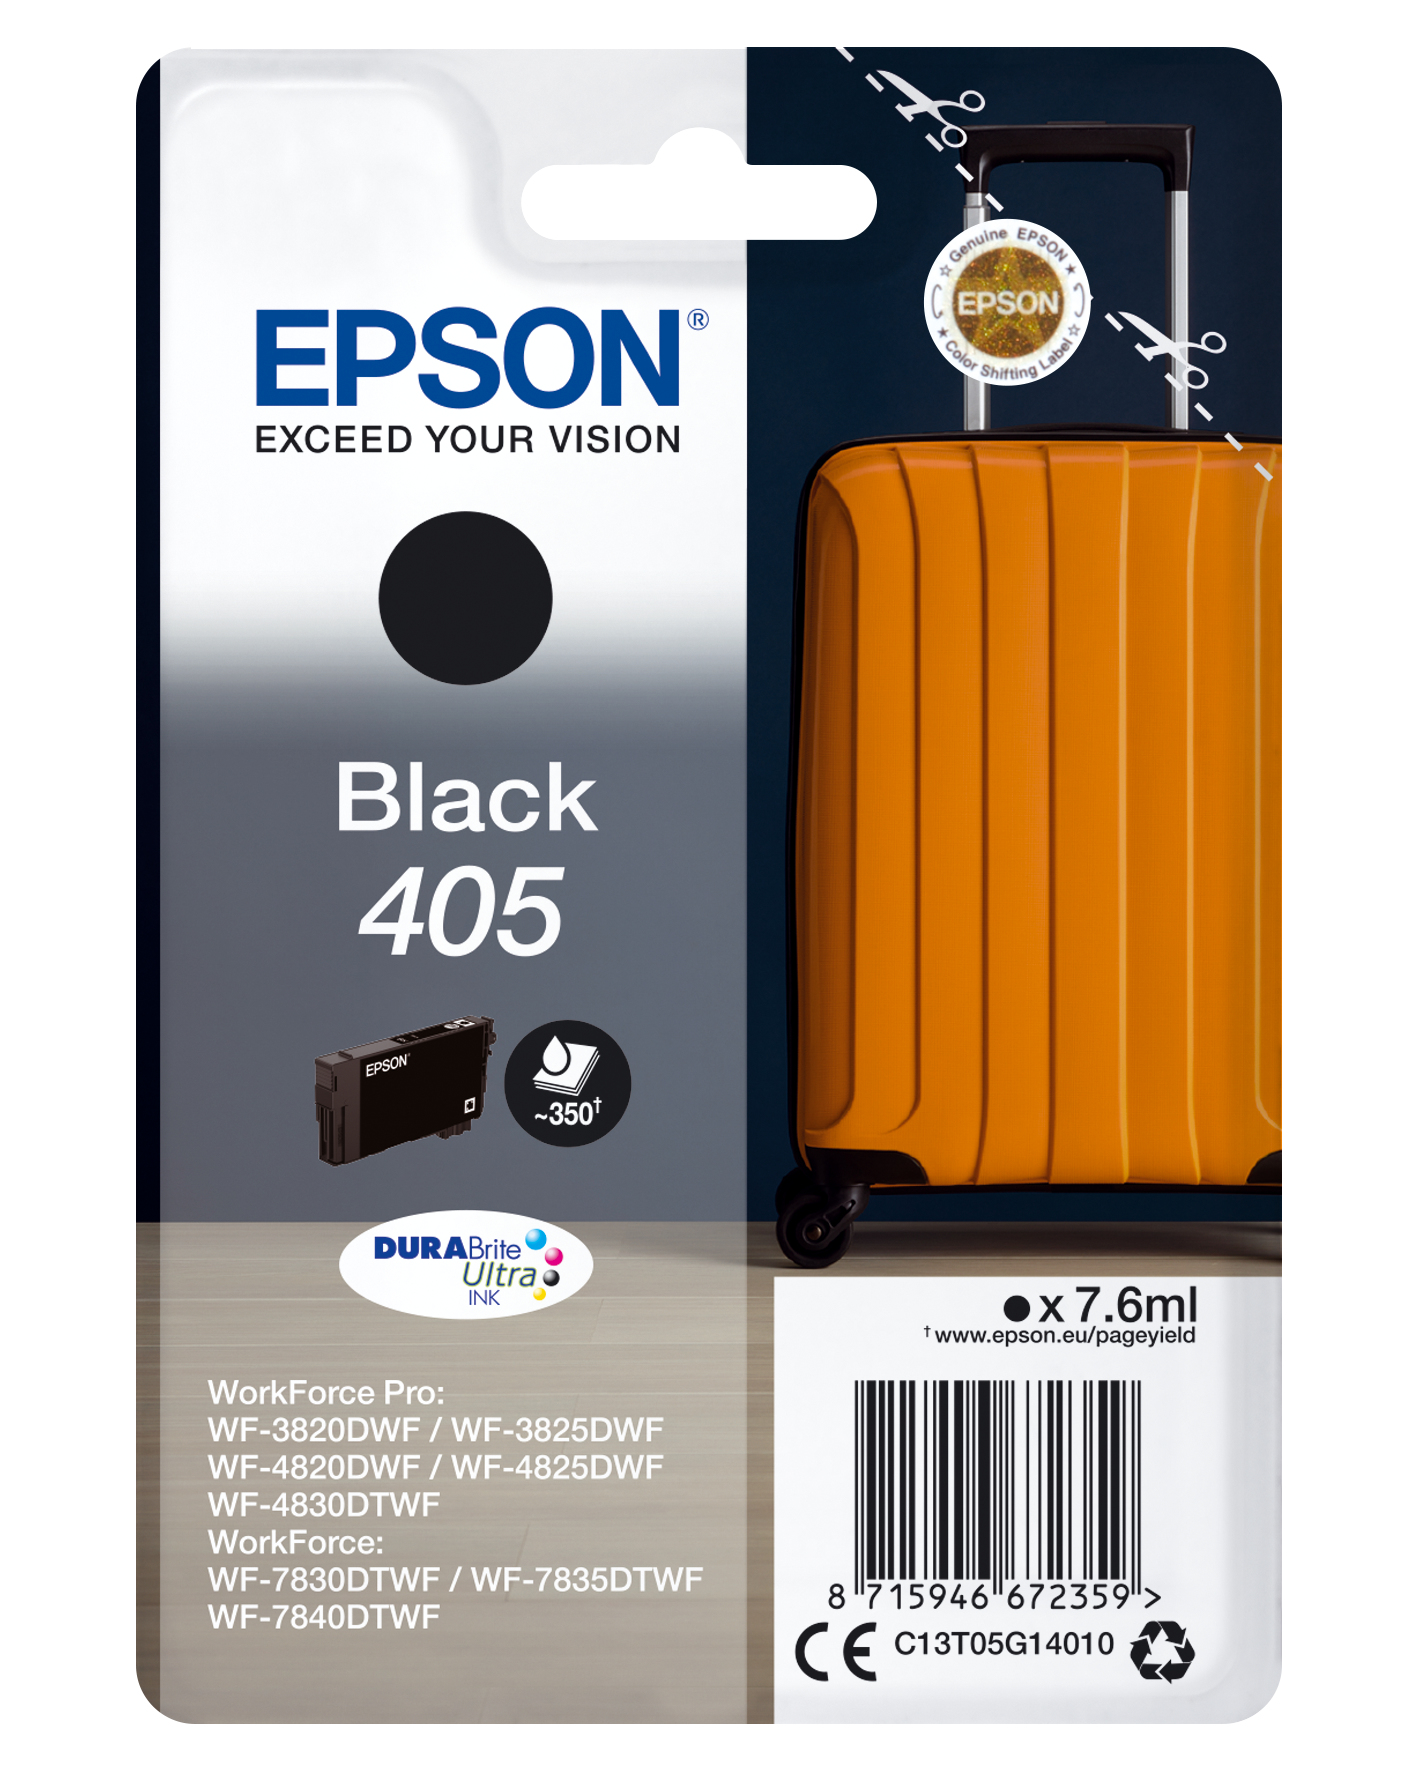 Epson Singlepack Black 405 DURABrite Ultra Ink - Standardertrag - Farbsublimations-Tinte - 7,6 ml - 7,6 ml - 1 Stück(e) - Einzelpackung